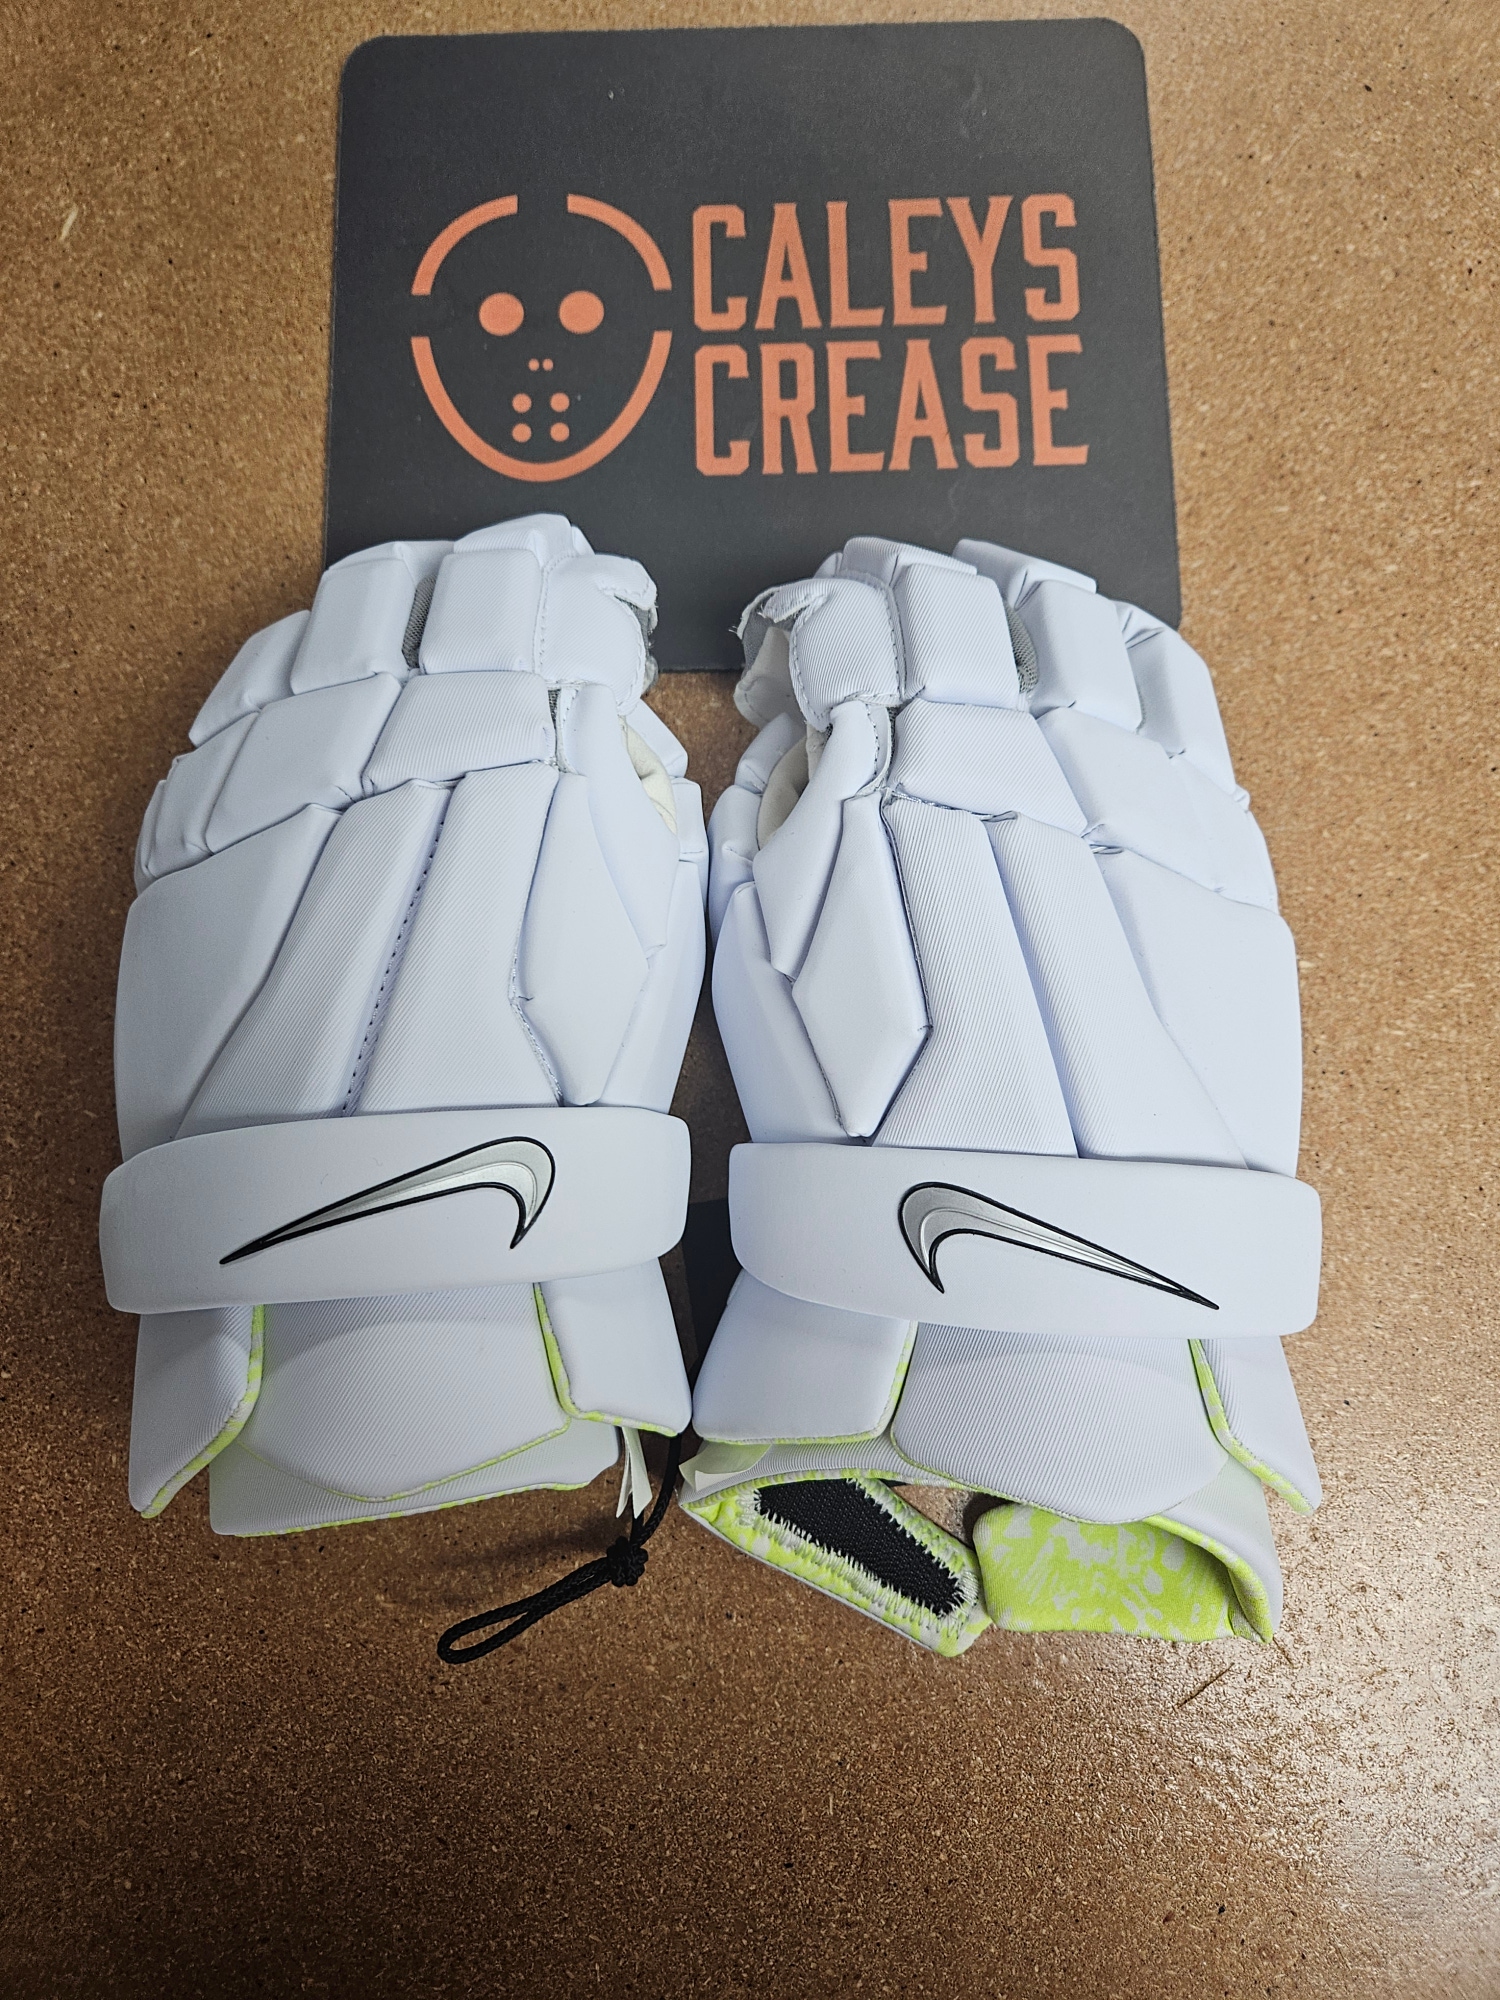 New Nike Vapor Pro Lacrosse Gloves Medium